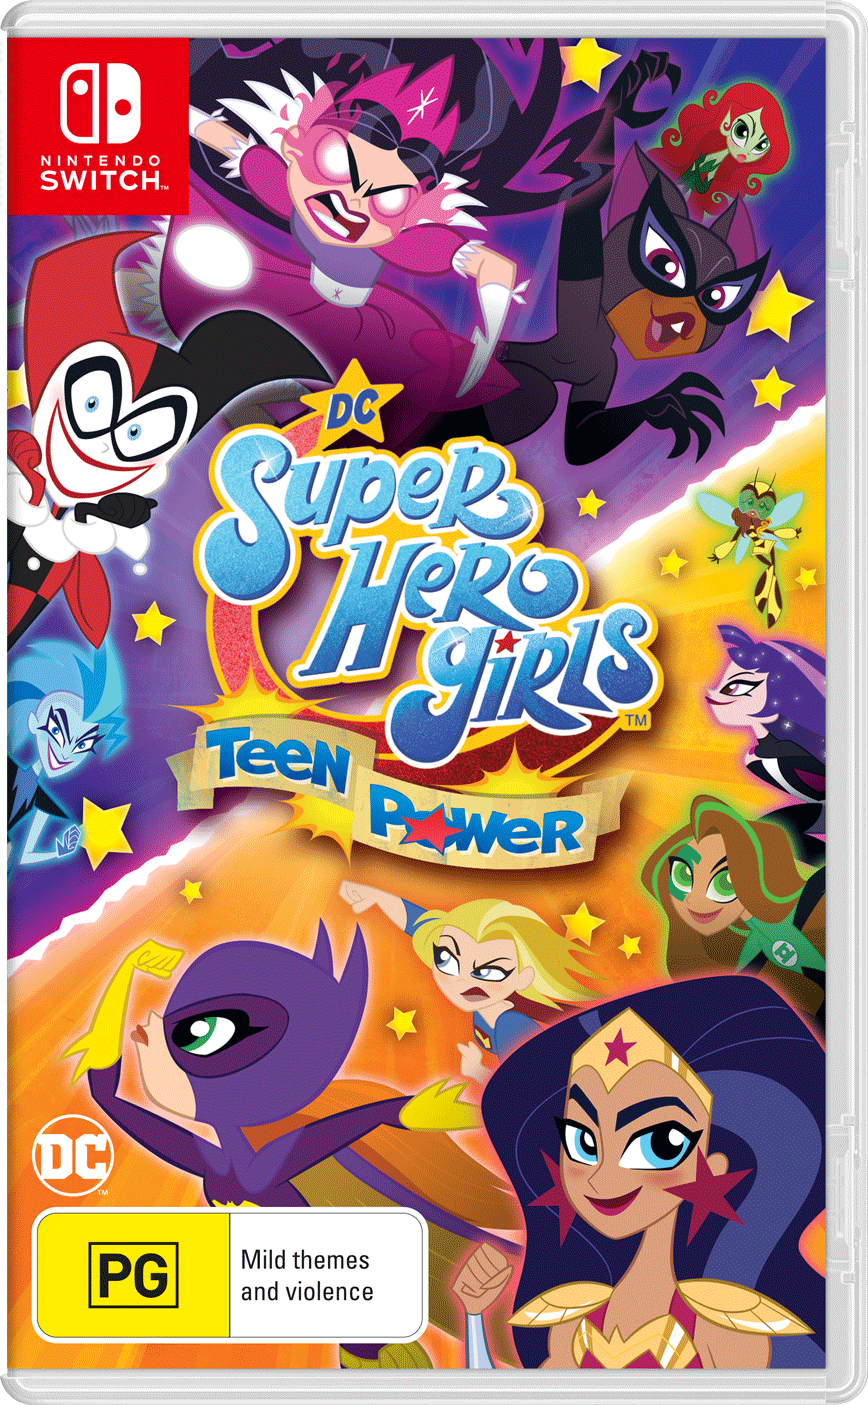 DC-SuperHeroGirls-TeenPower_packshot.png